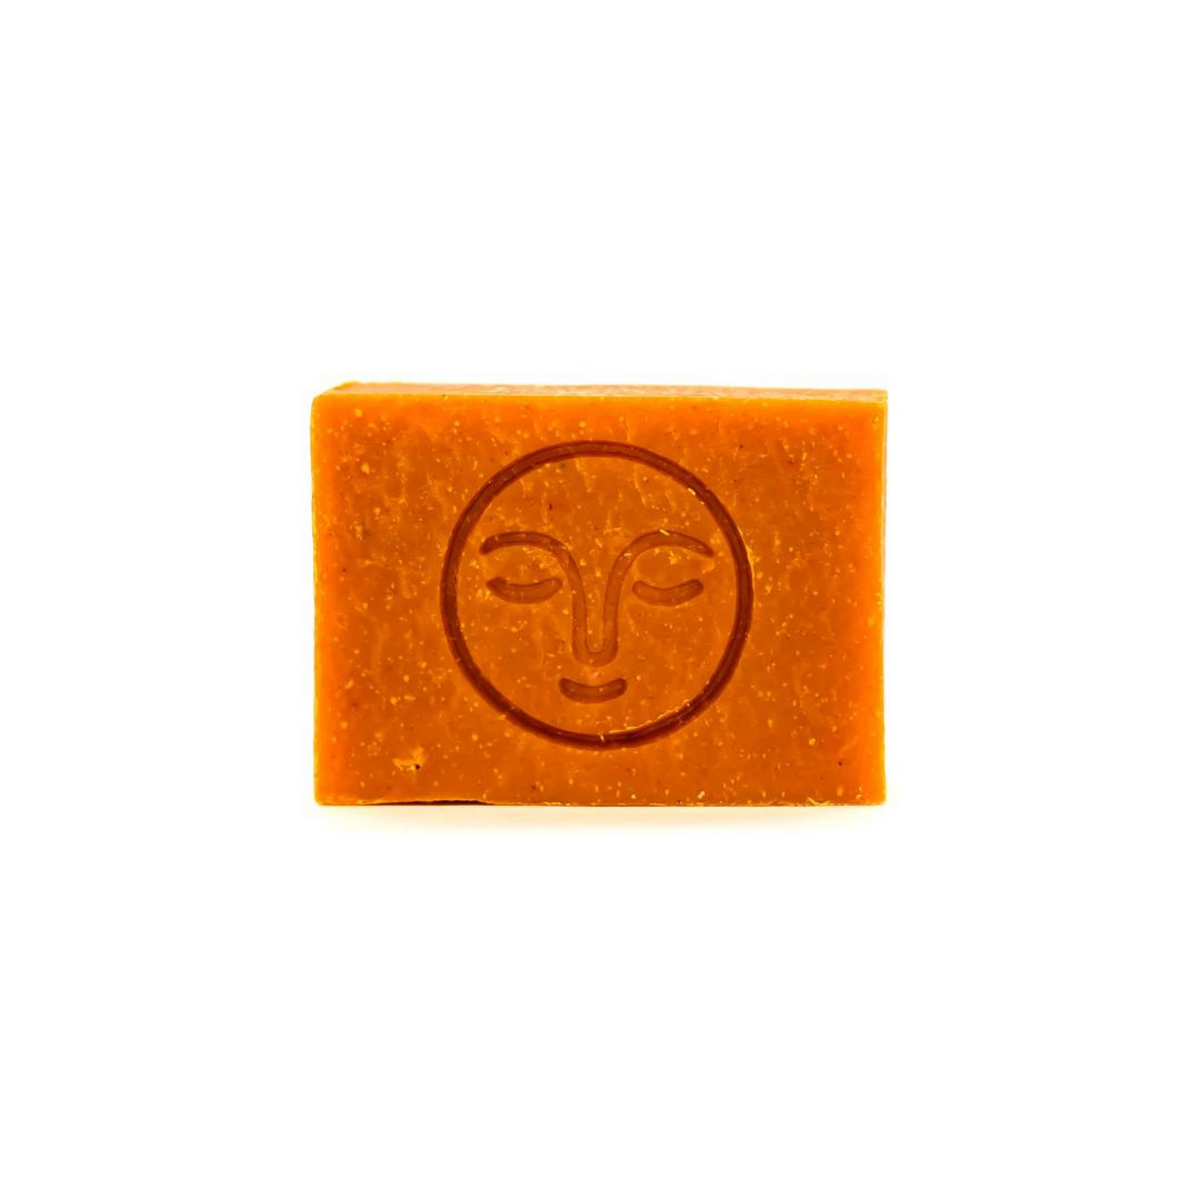 Moon Valley Organics Orange Spice Herbal Soap (4 oz) #10084951